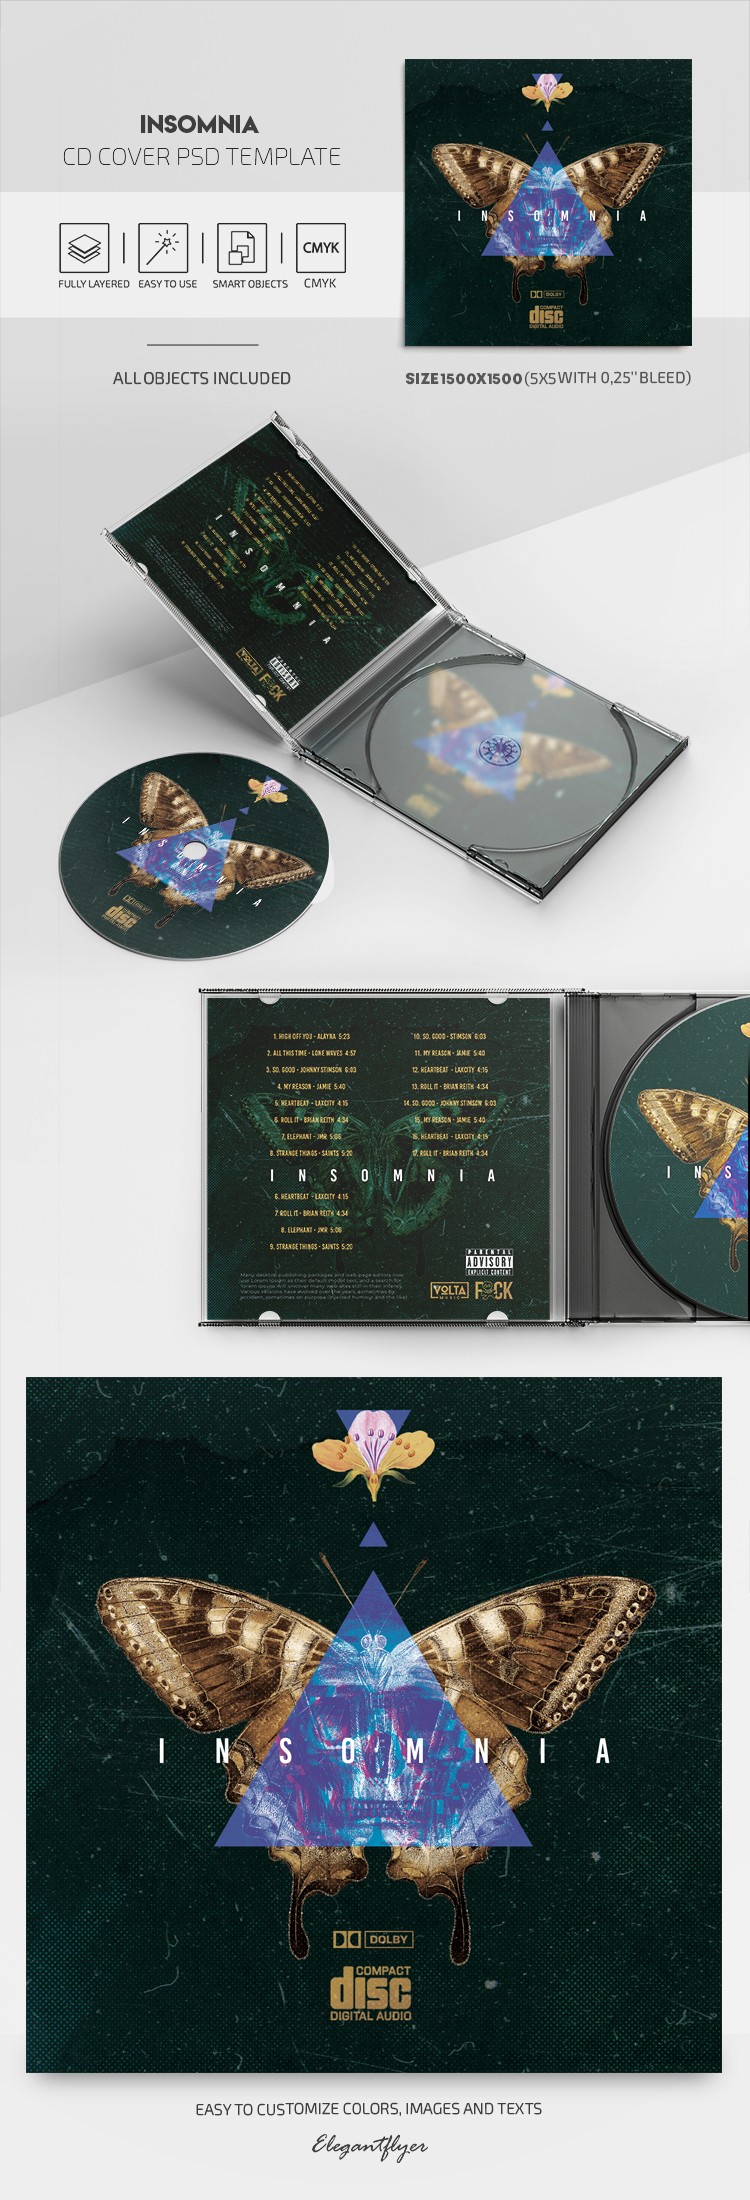 Insomnie CD-Cover by ElegantFlyer